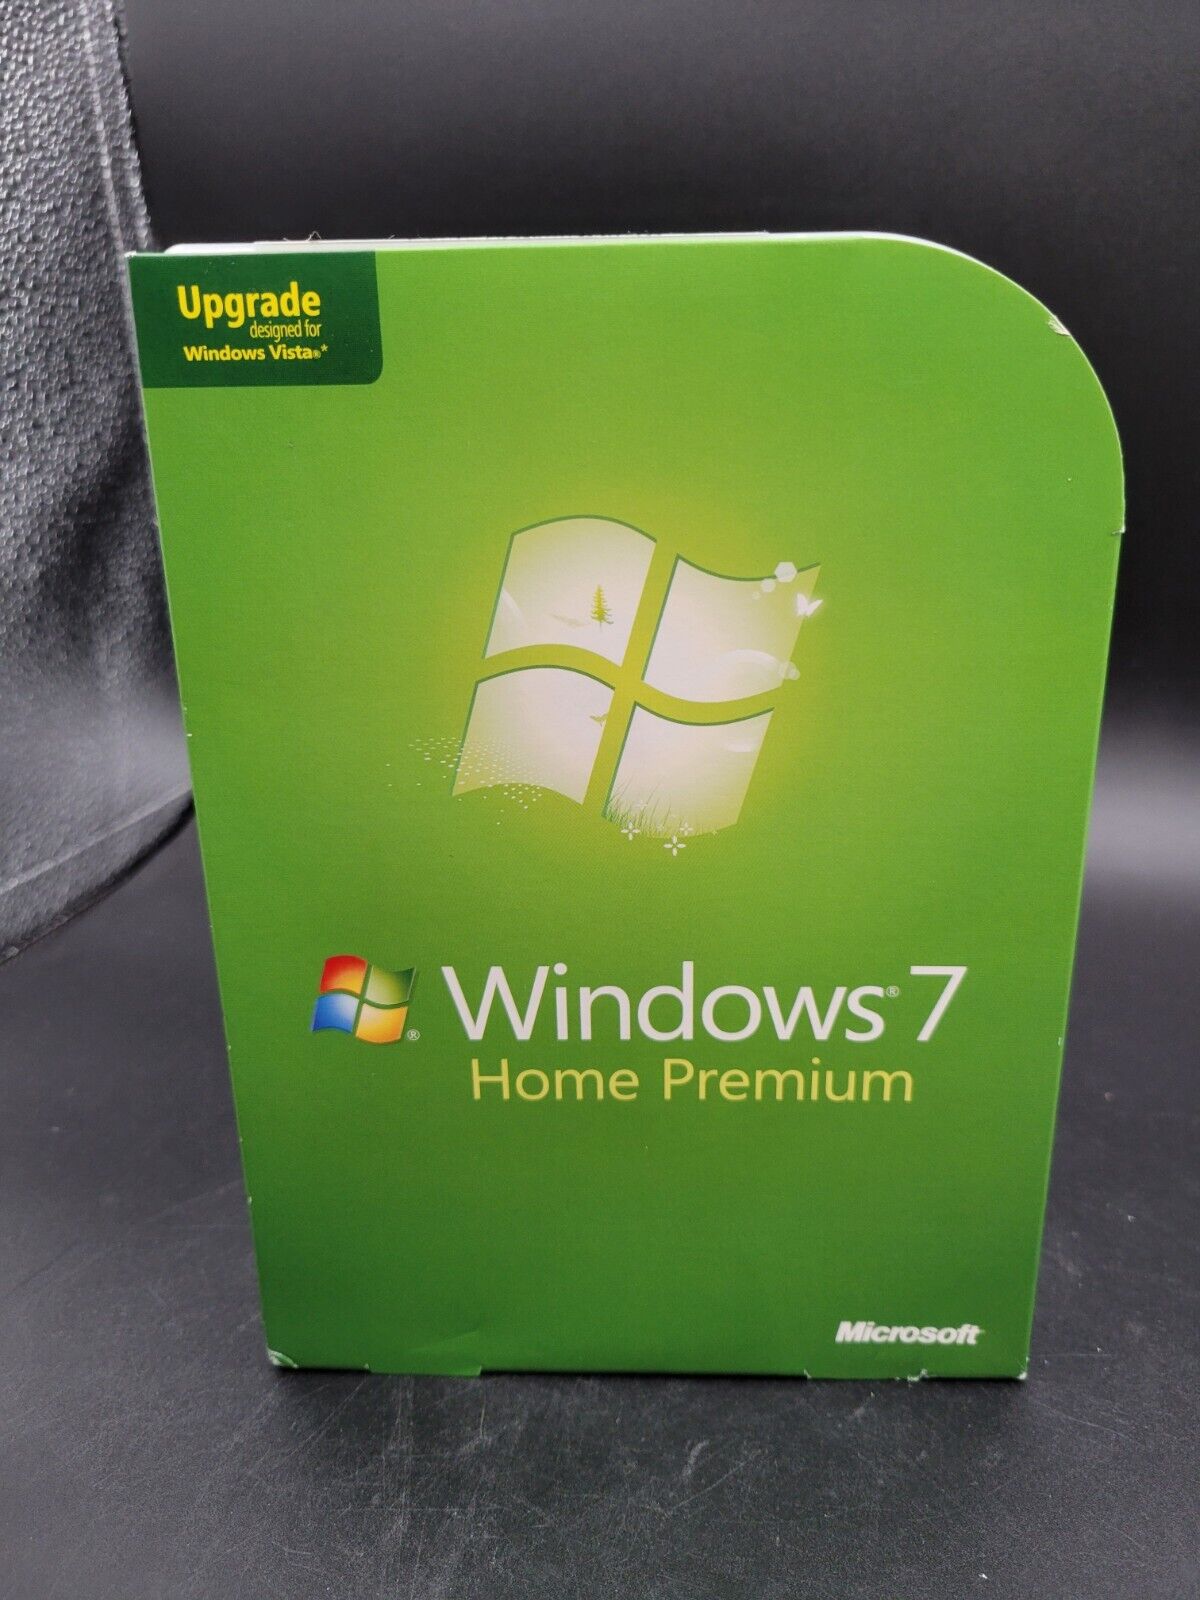 microsoft windows 7 home premium upgrade